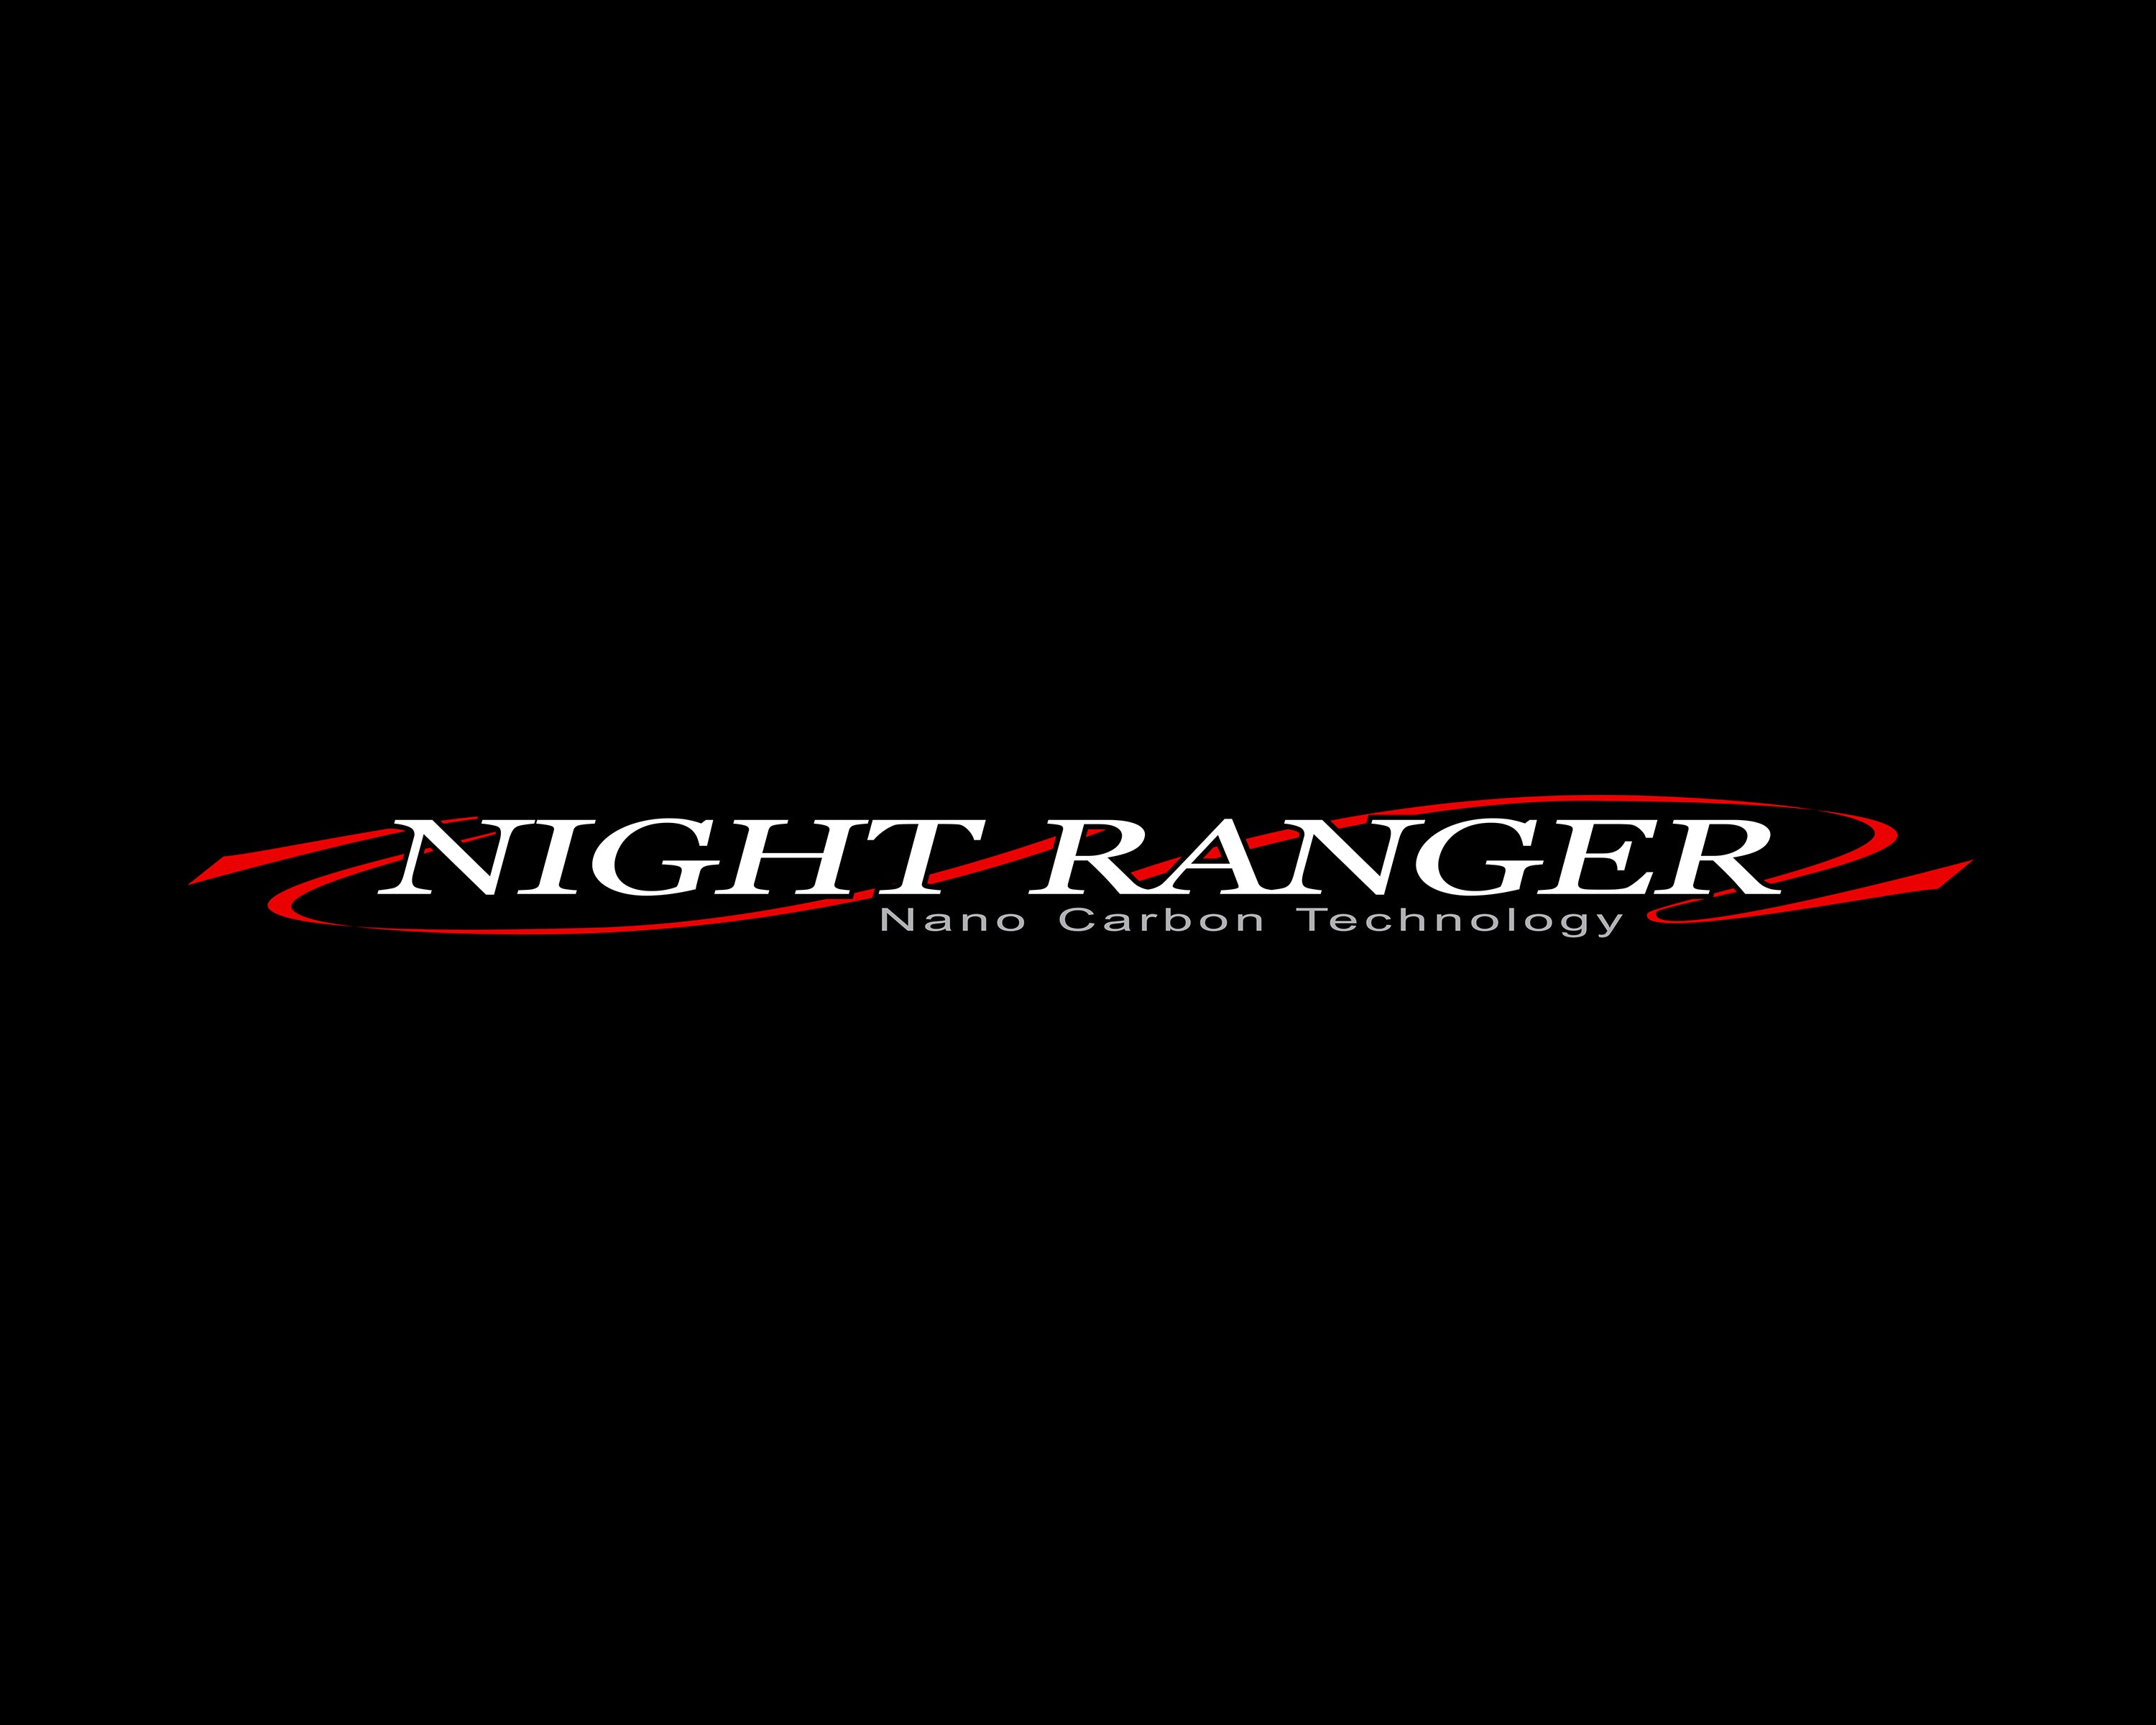 Jigging World Night Ranger Rods